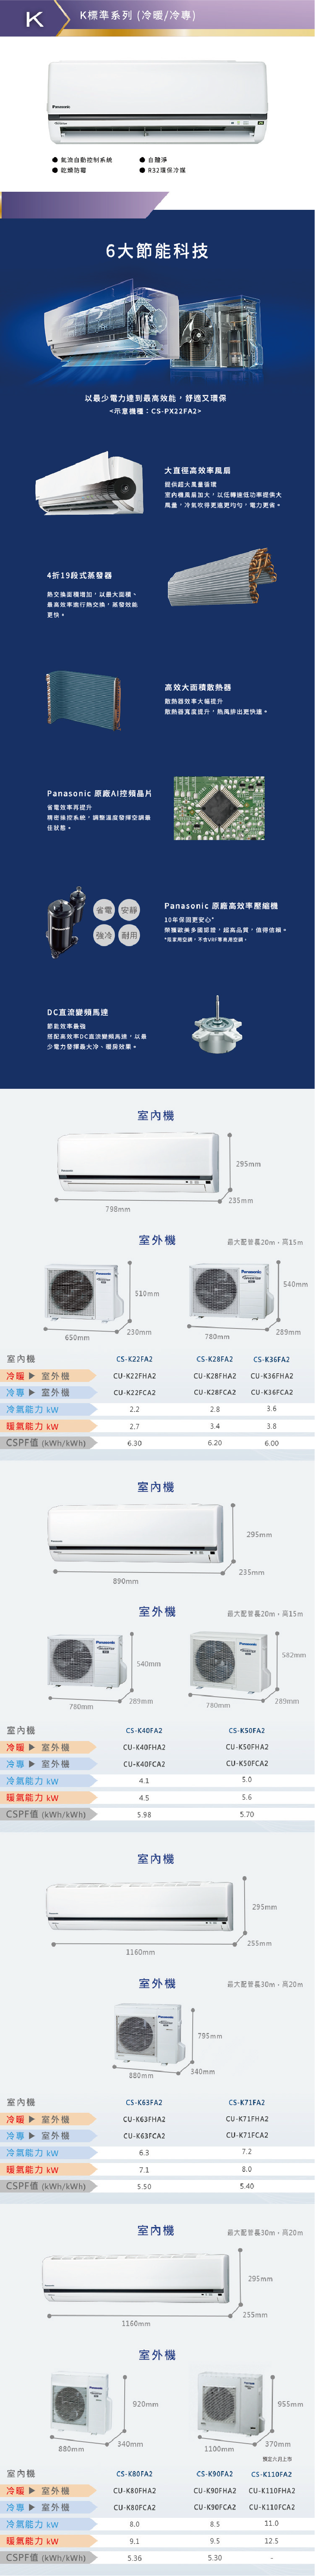 CU-K50FCA2 8坪適用 K系列 一對一 分離式 變頻 冷專 冷氣 CS-K50FA2